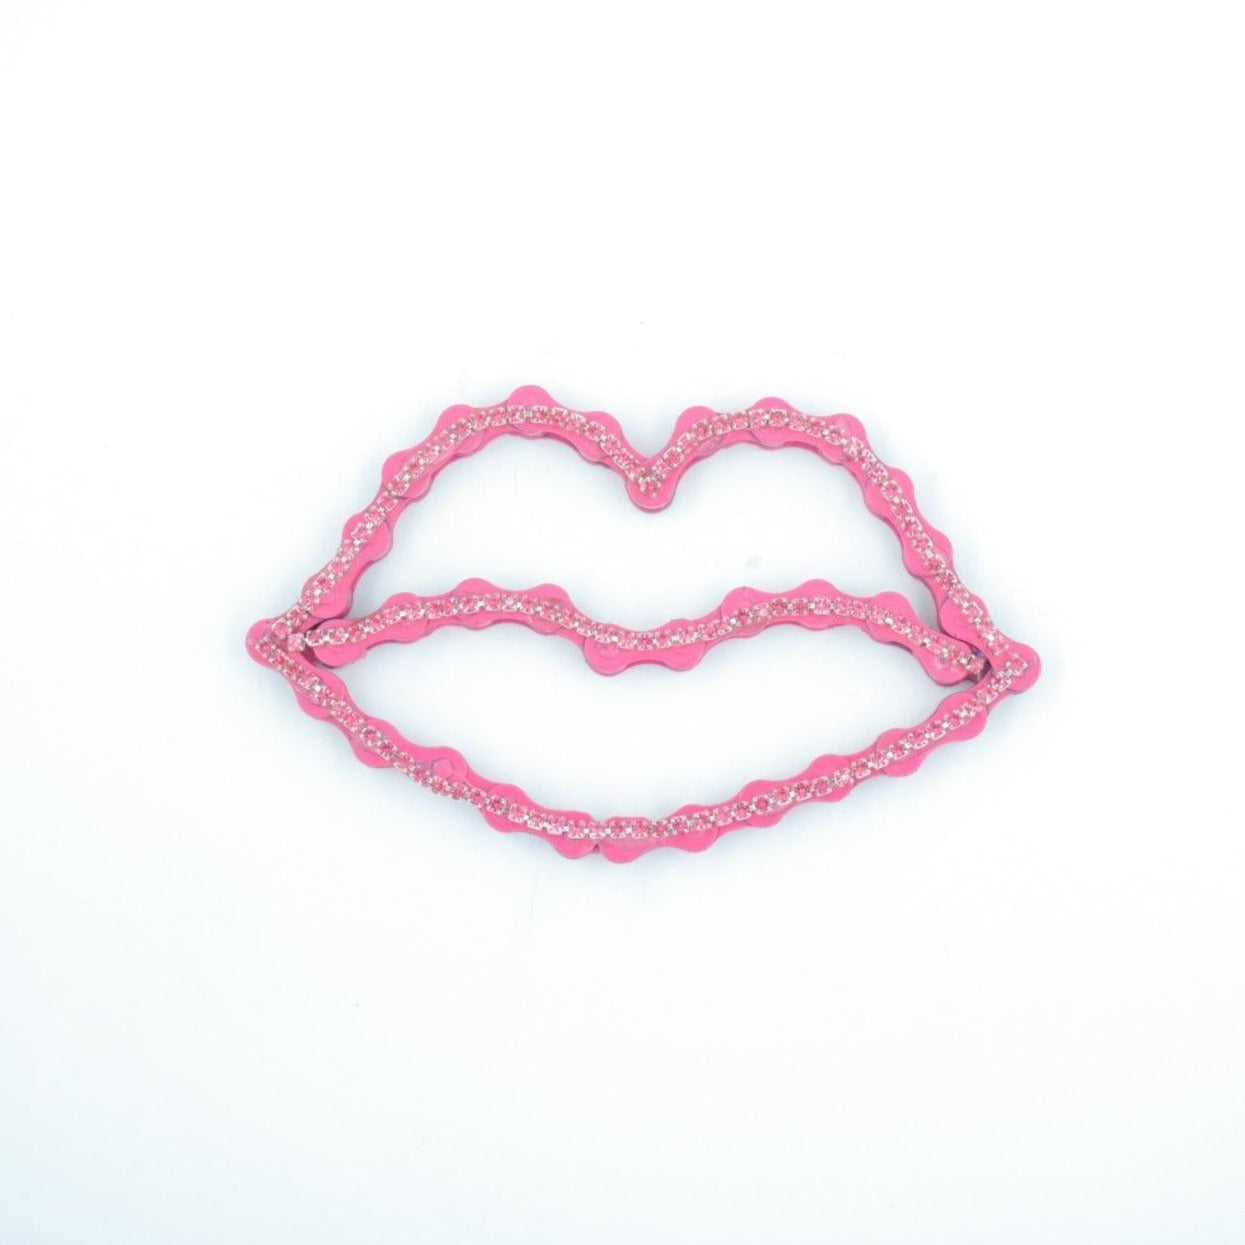 Lips Sculpture | UNCHAINED by NIRIT LEVAV PACKER